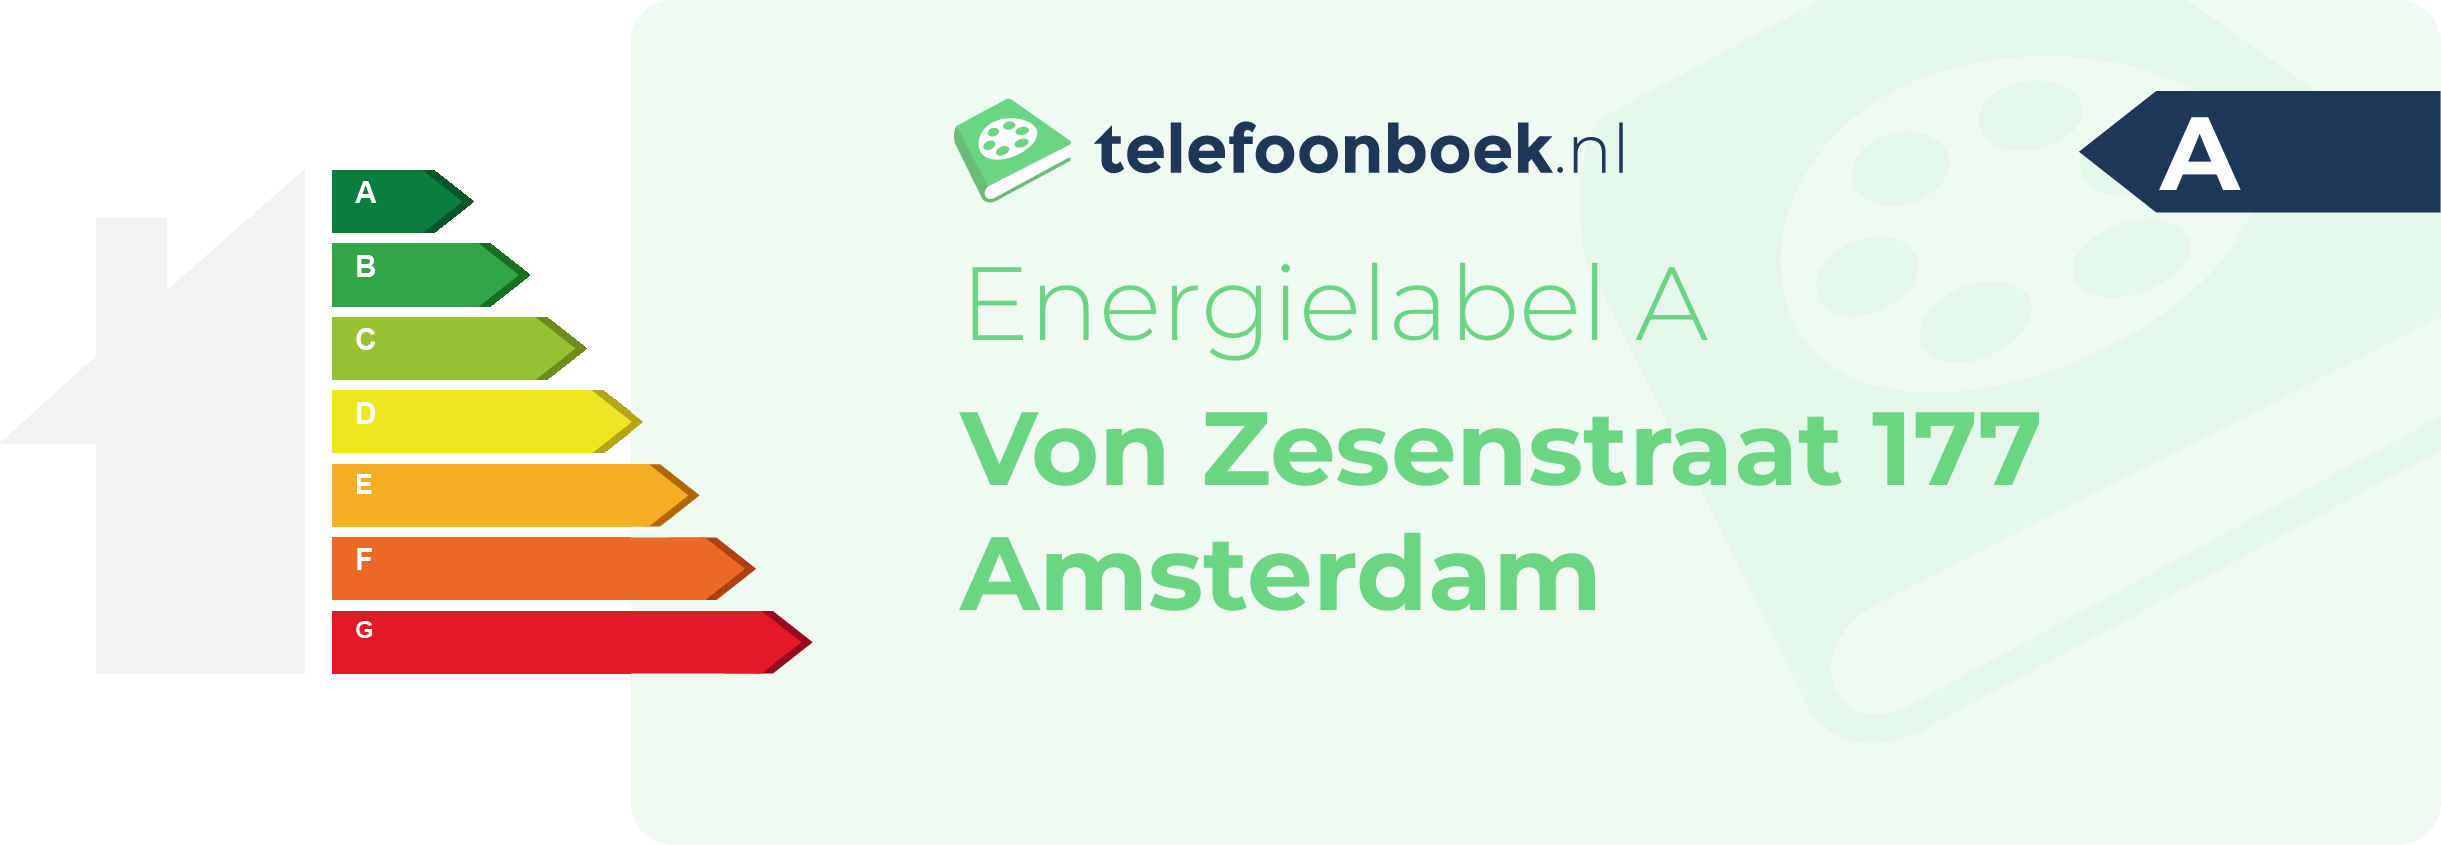 Energielabel Von Zesenstraat 177 Amsterdam